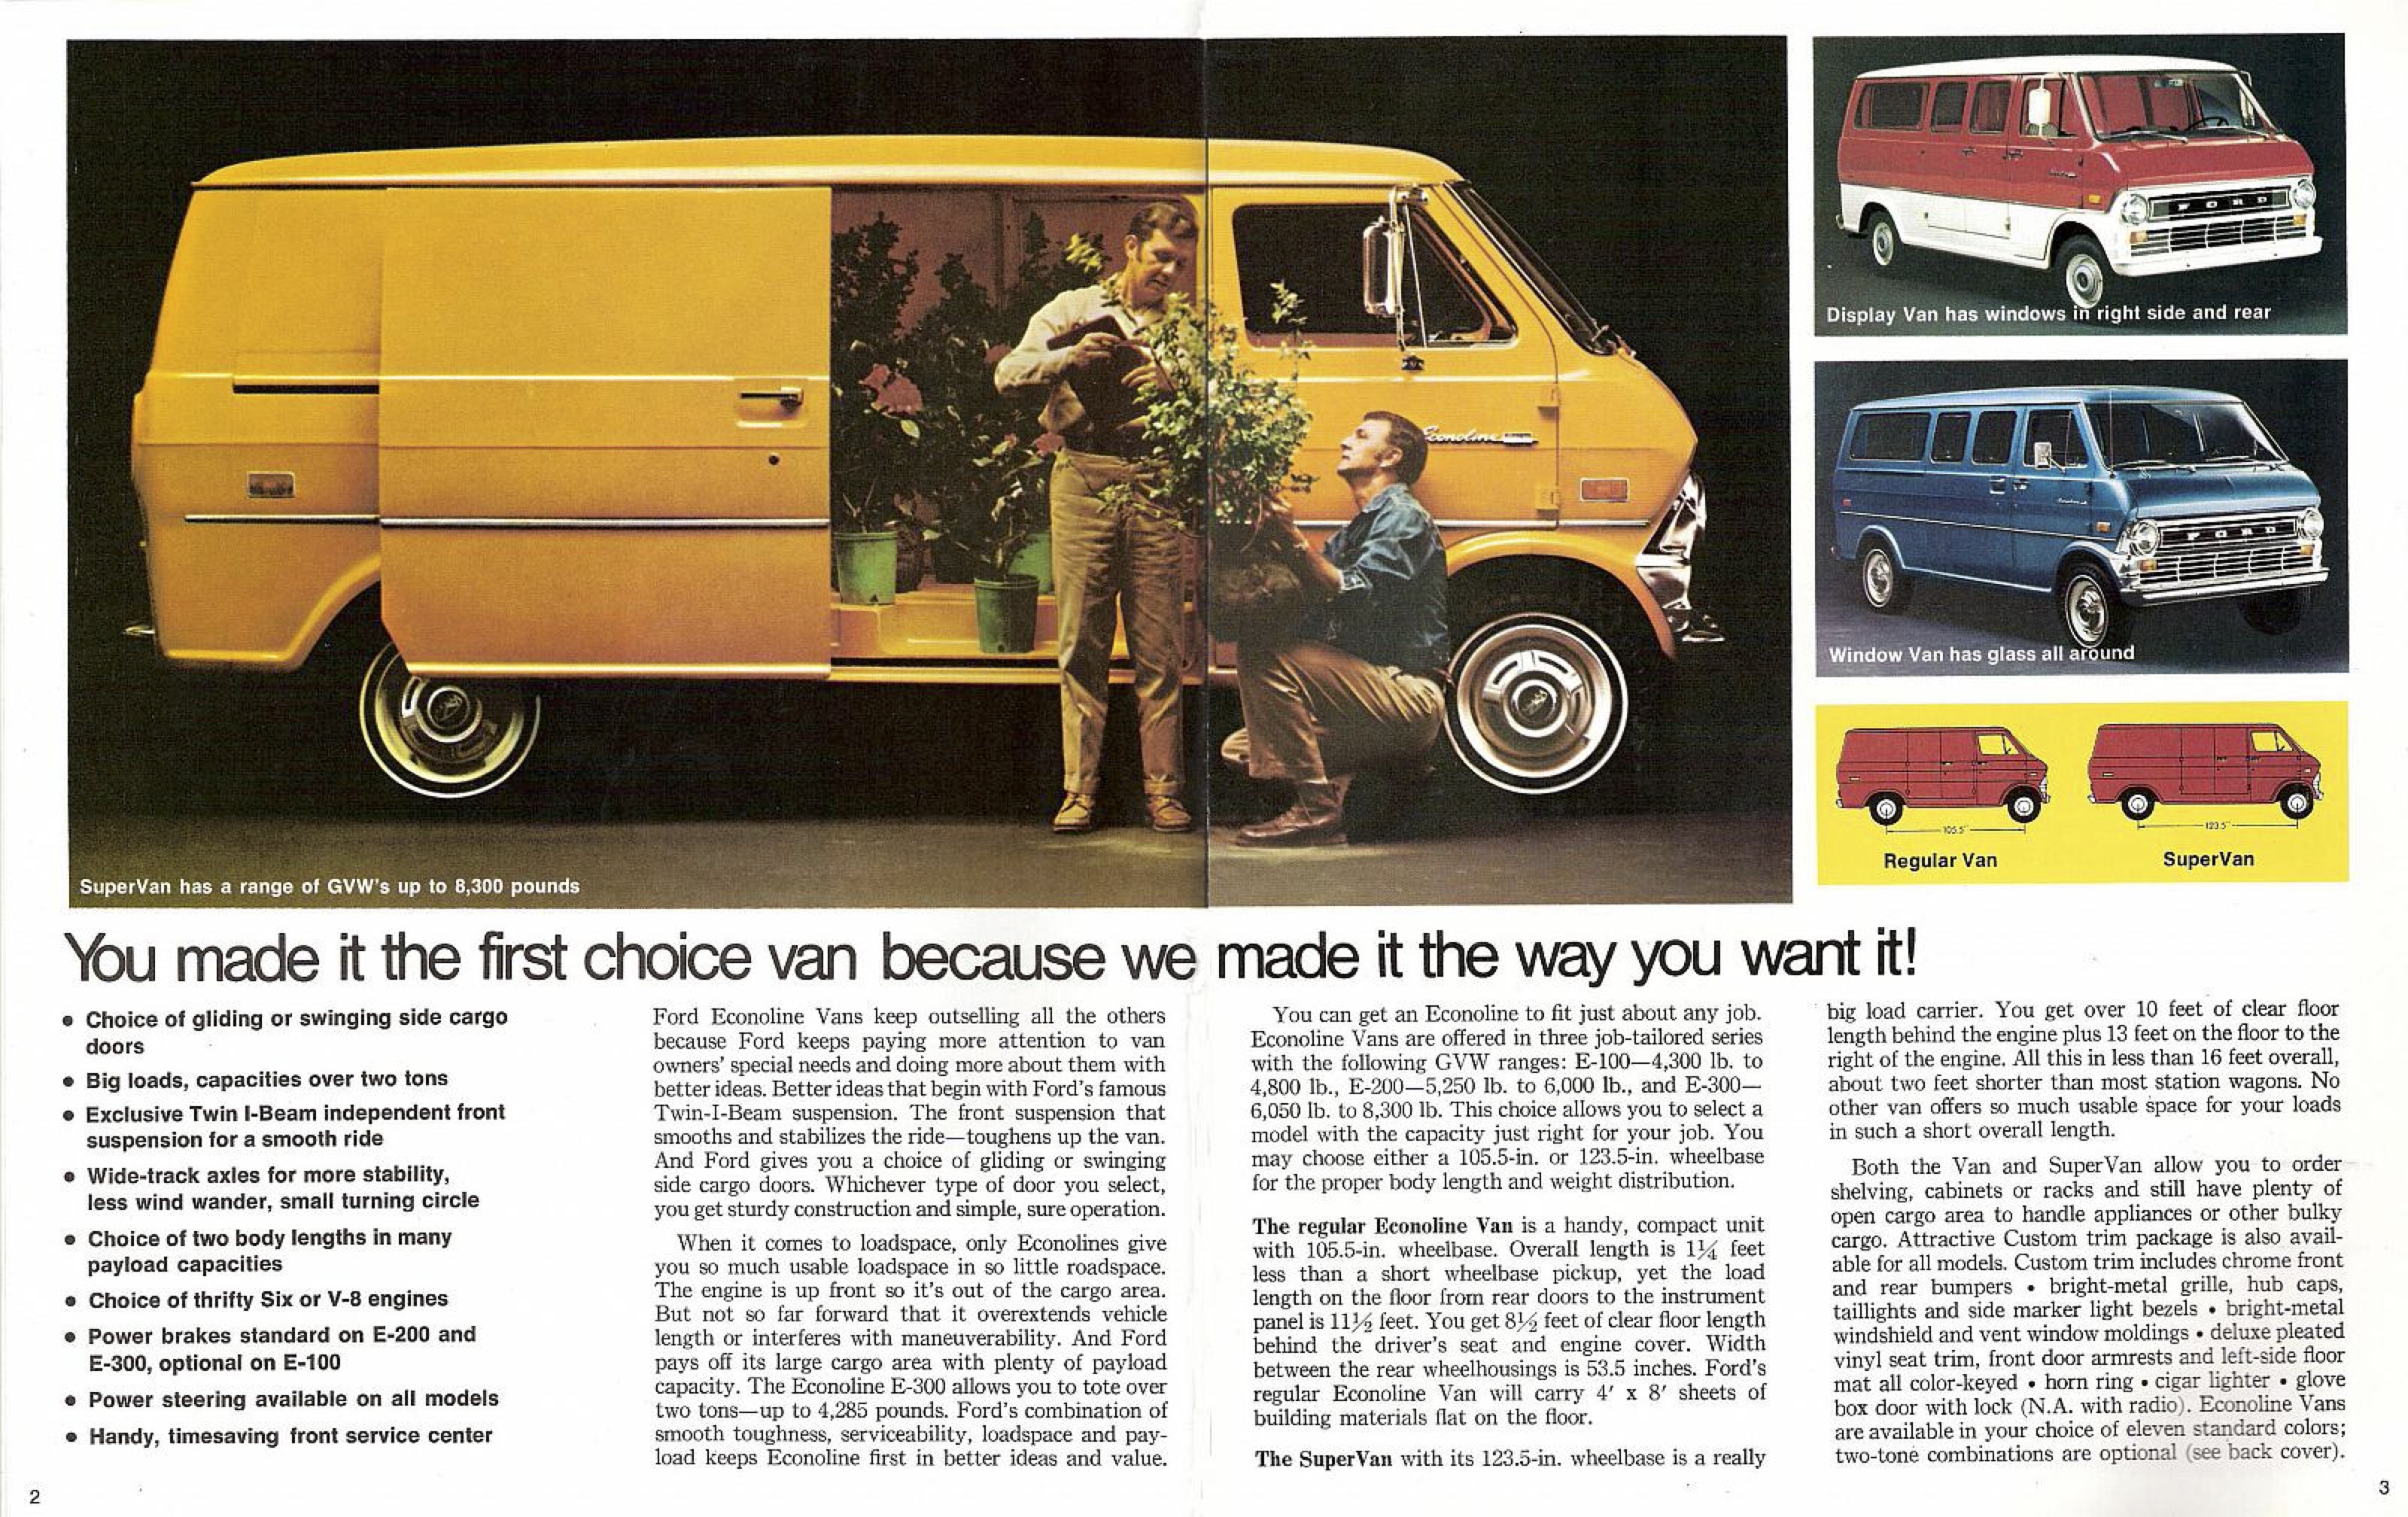 1972 FORD ECONOLINE VAN BROCHURE 72 CLUB WAGON SALES CATALOG 2 for 1 Deal! 